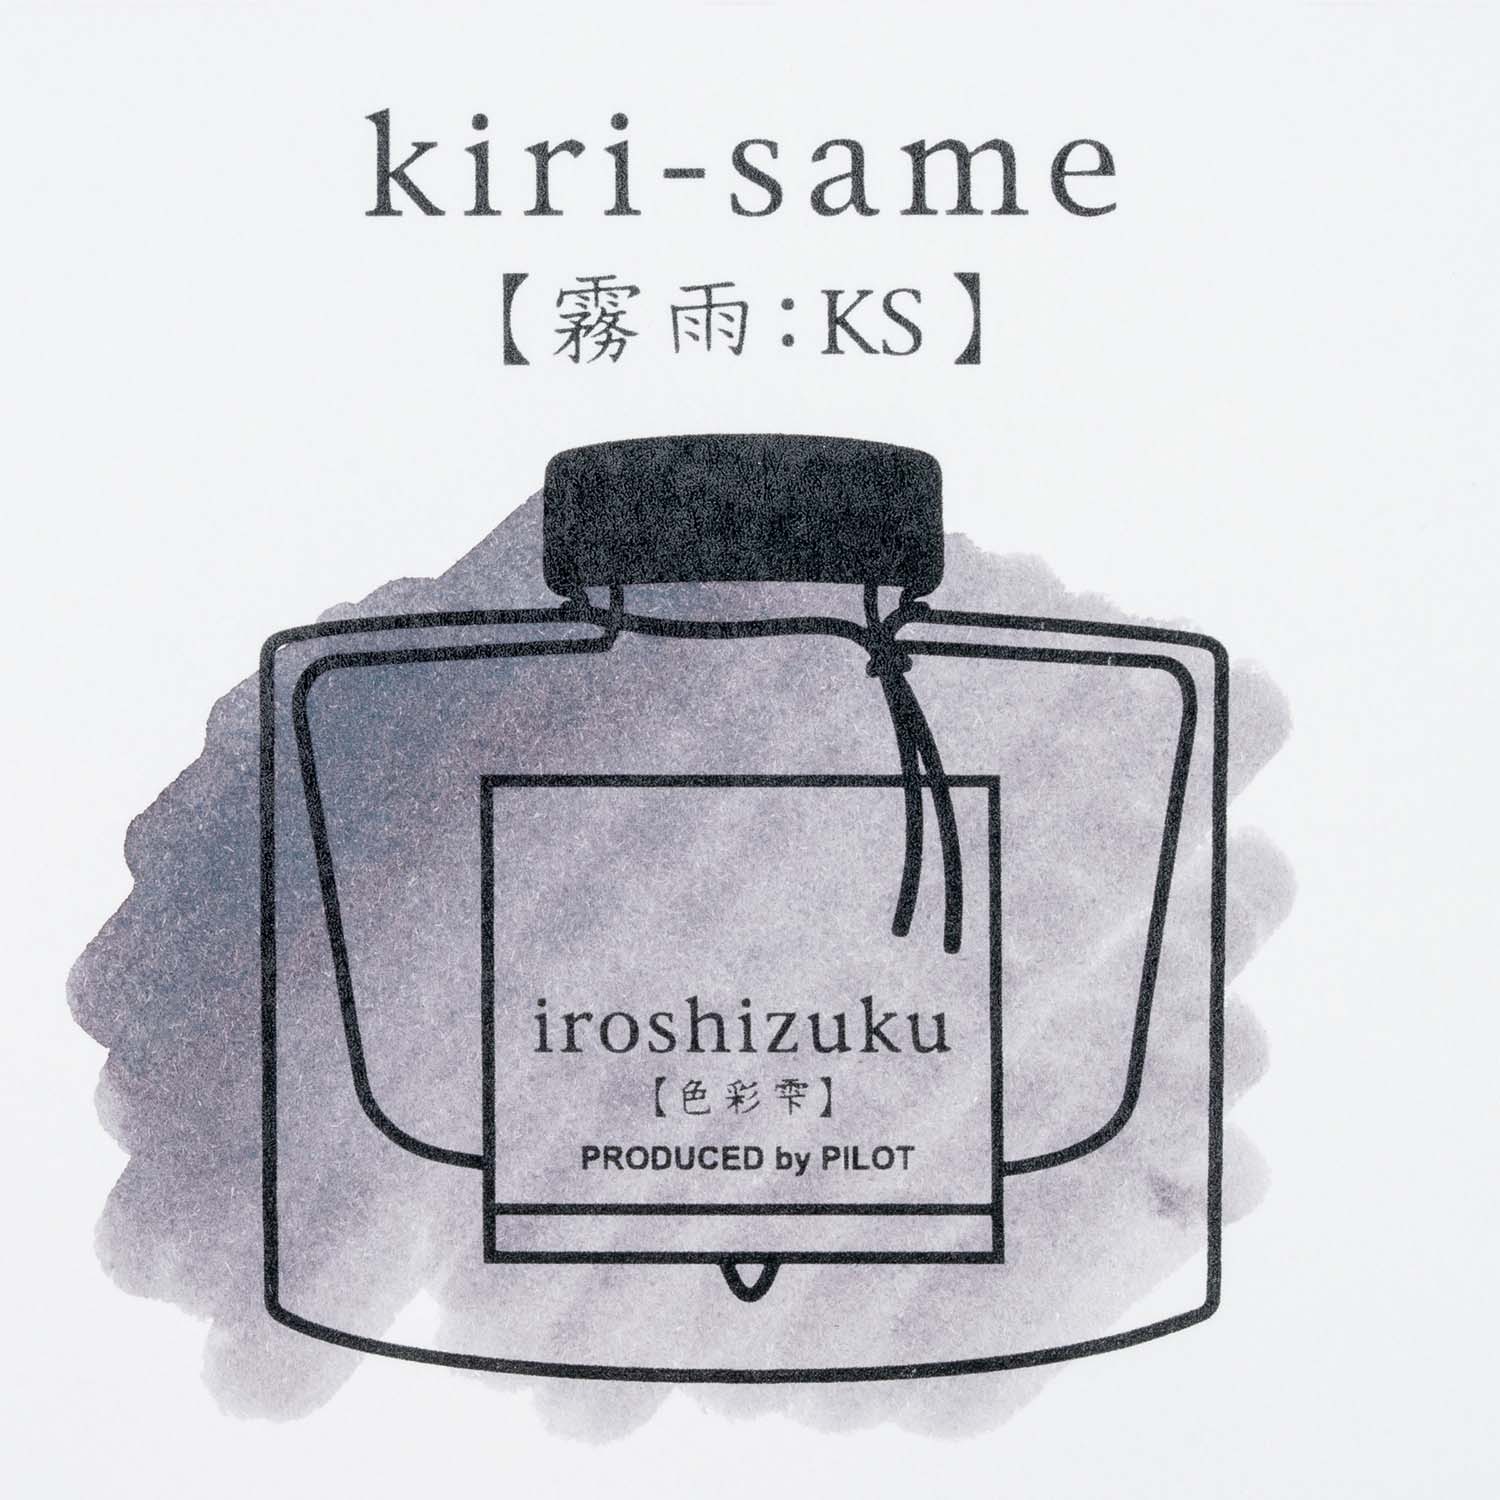 Pilot Iroshizuku Fountain Pen Ink - Kiri-same (Scotch Mist) - 50 ml Bottle gray